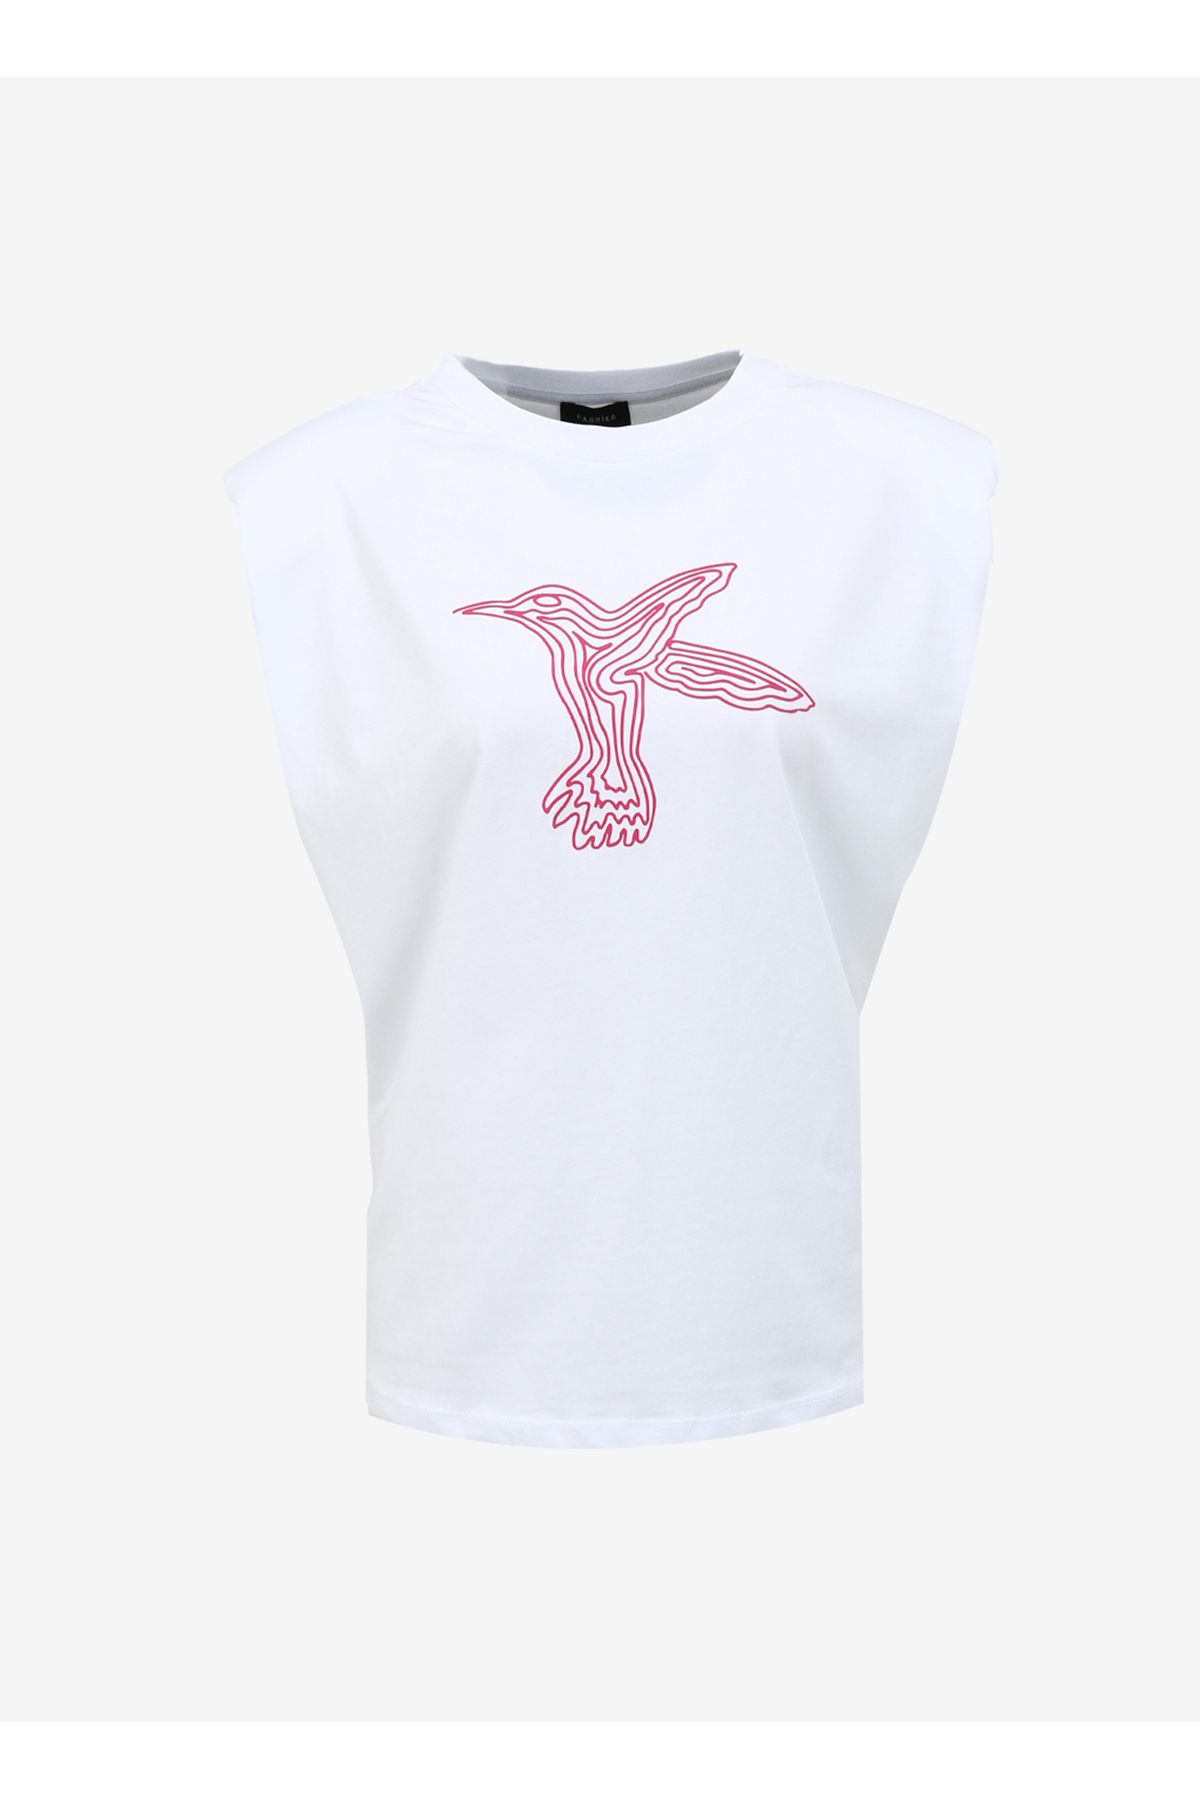 Fabrika Kırık Beyaz Kadın Bisiklet Yaka Geniş Fit T-shirt F4sl-tst0328